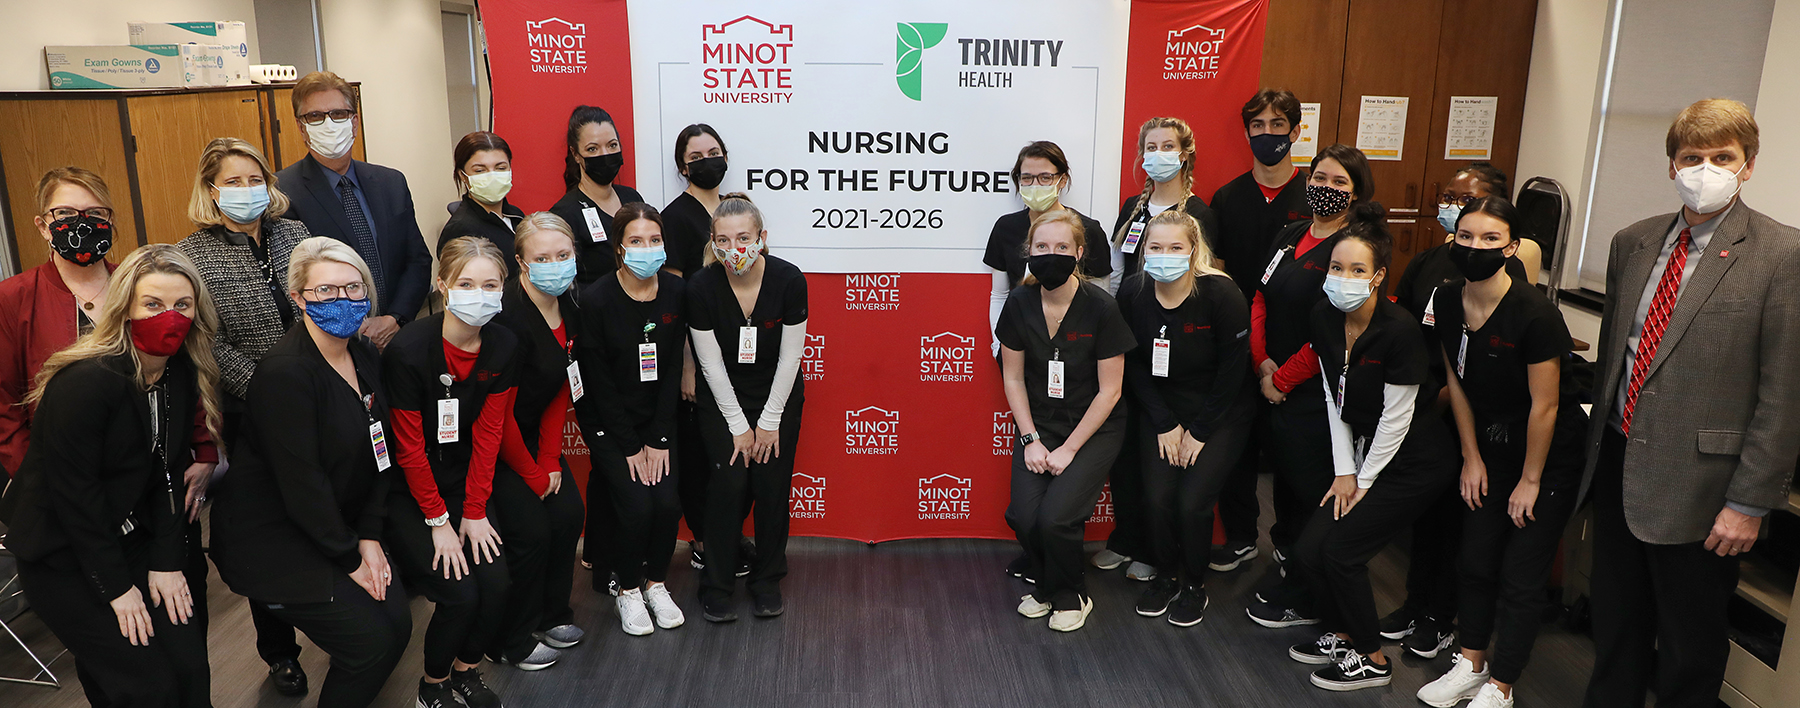 Trinity Health and MSU Nursing